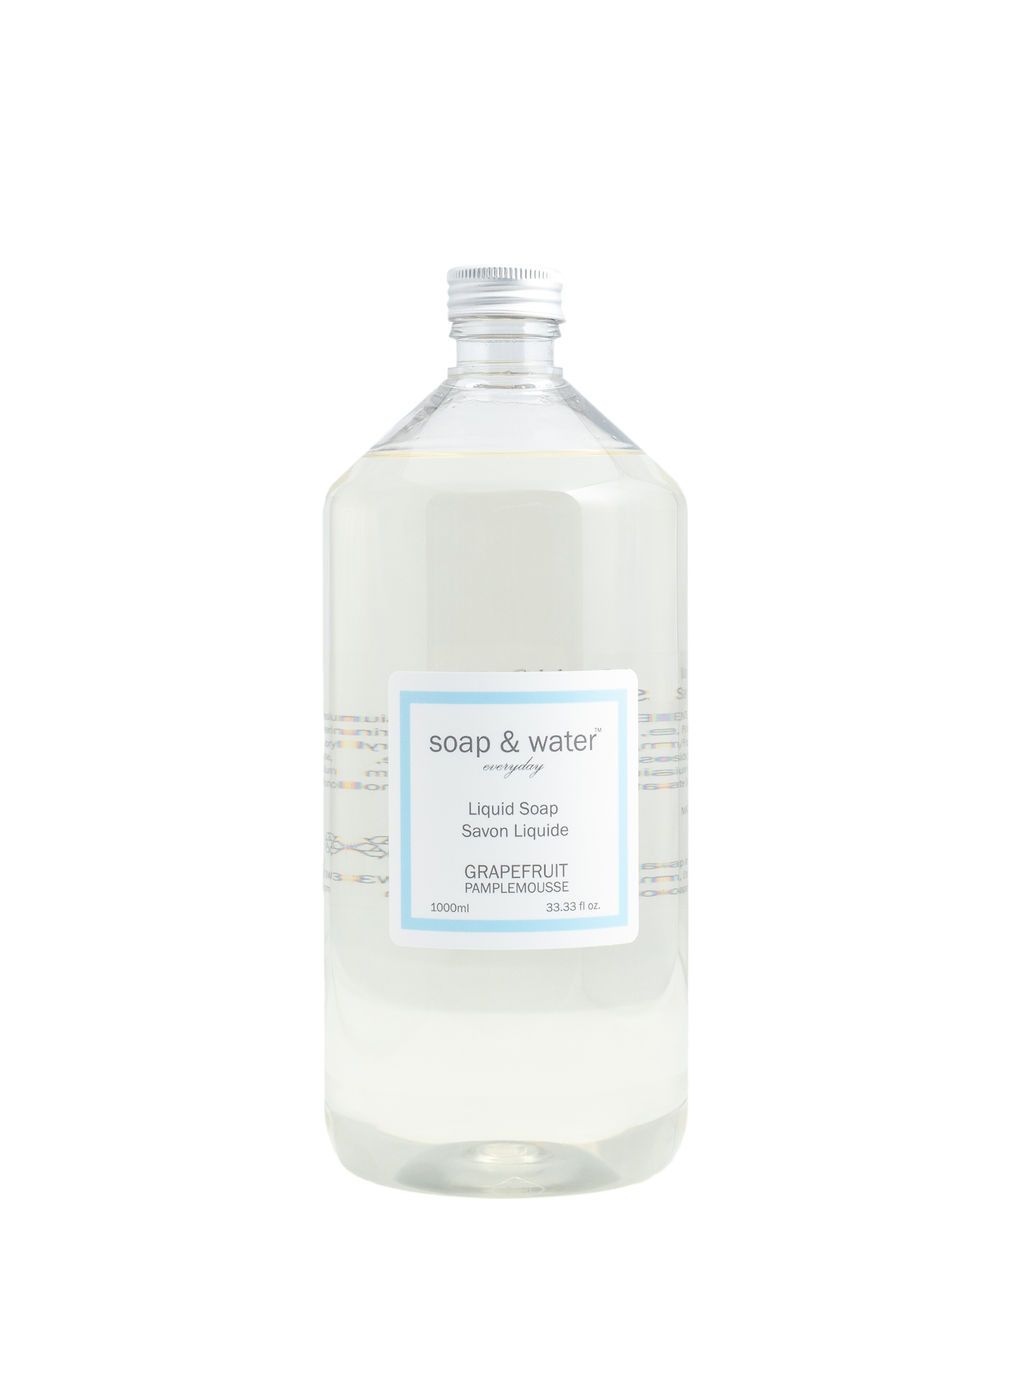 Soap & Water Grapefruit Liquid Soap - 1L Refill - Soap & Water Everyday